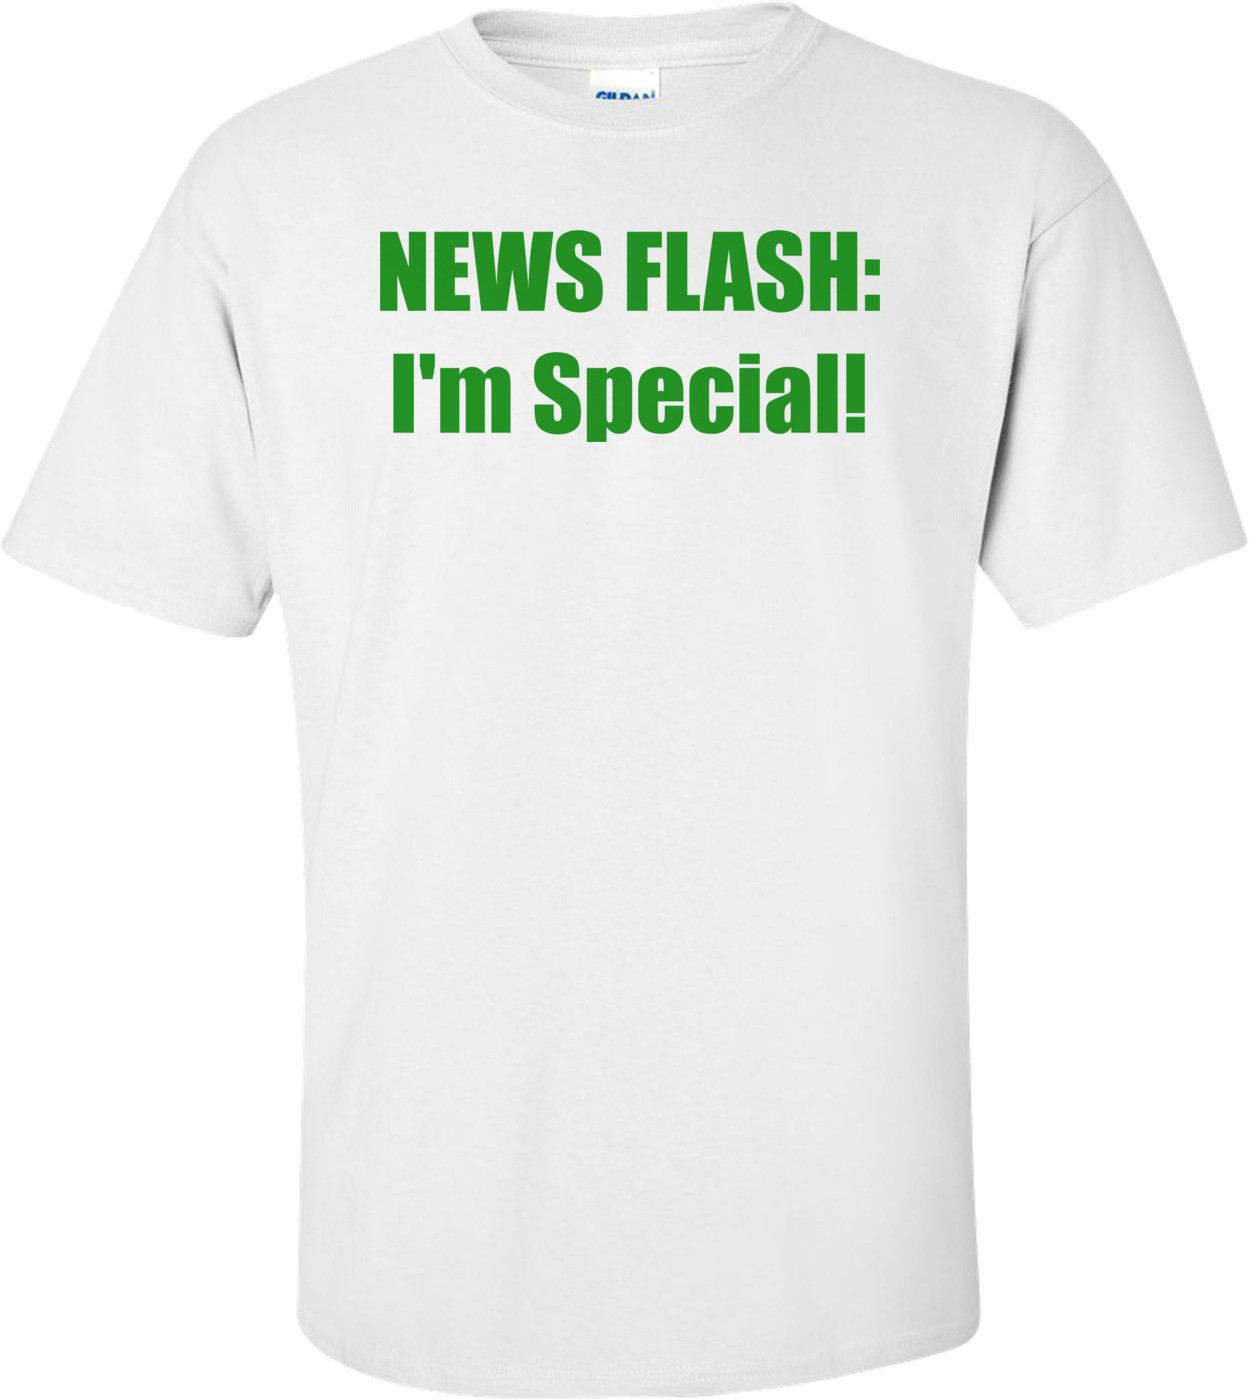 NEWS FLASH: I'm Special!